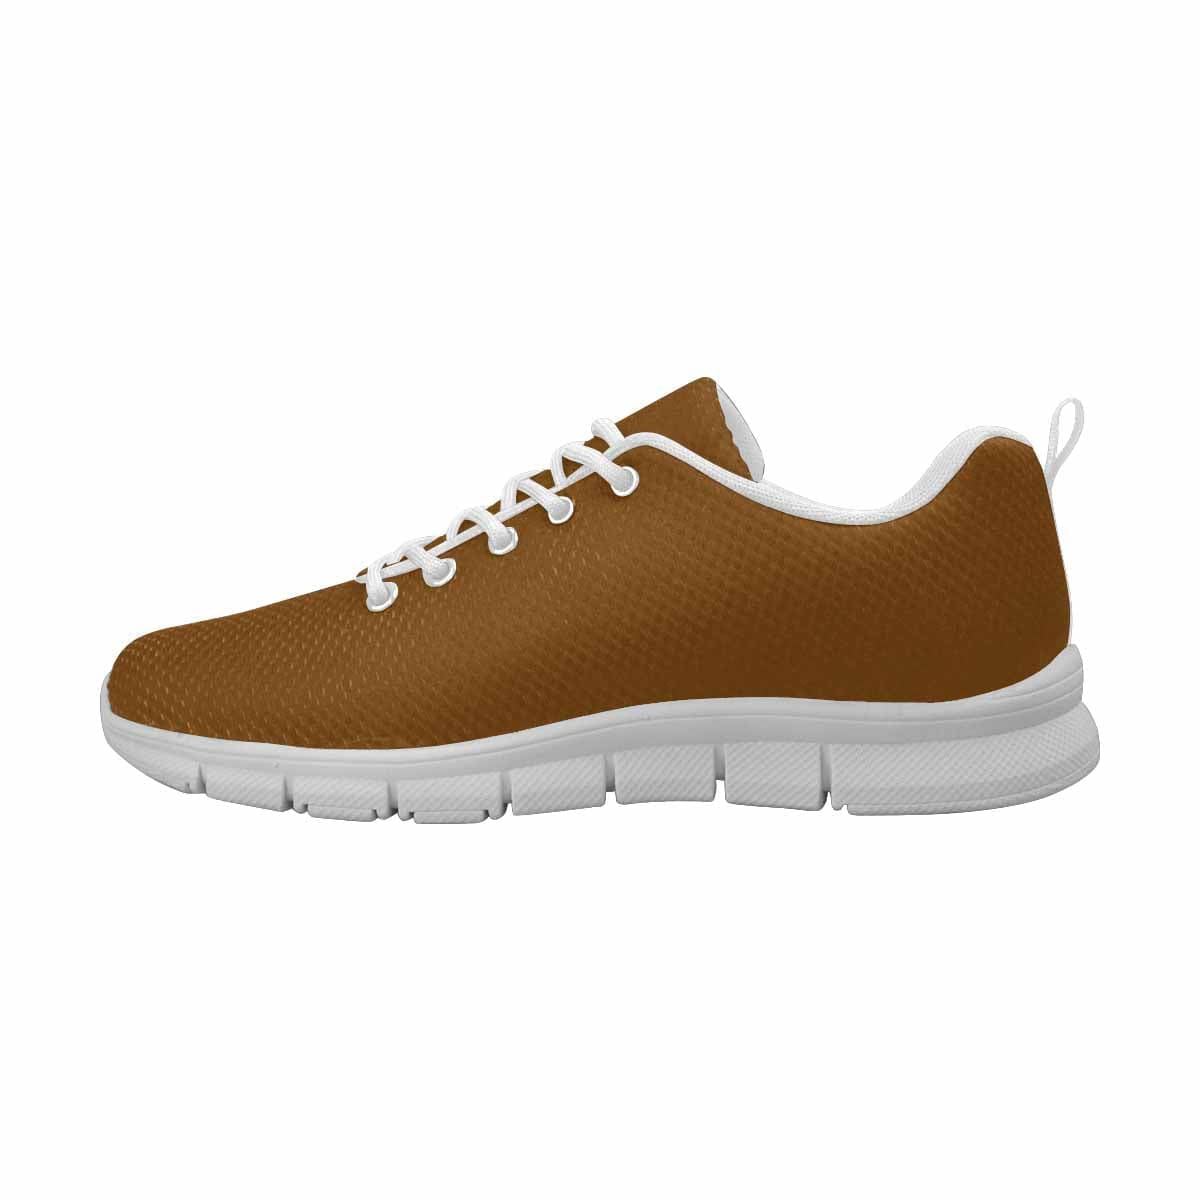 Sneakers For Men Chocolate Brown - Running Shoes - Mens | Sneakers | Running